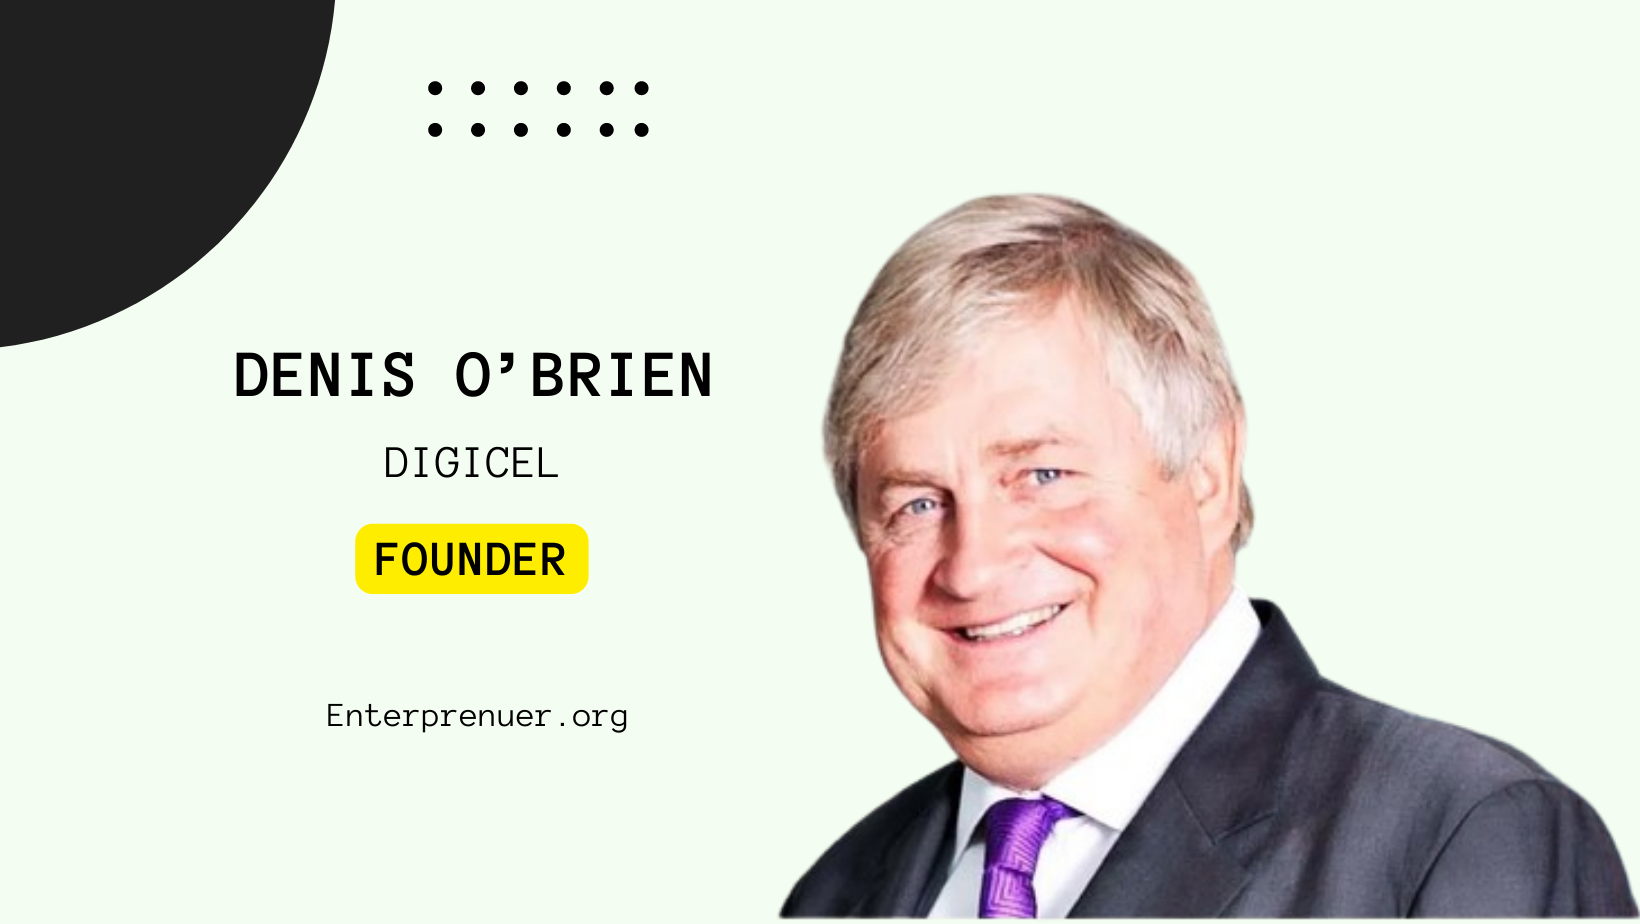 Meet Denis O’Brien, Founder of Digicel